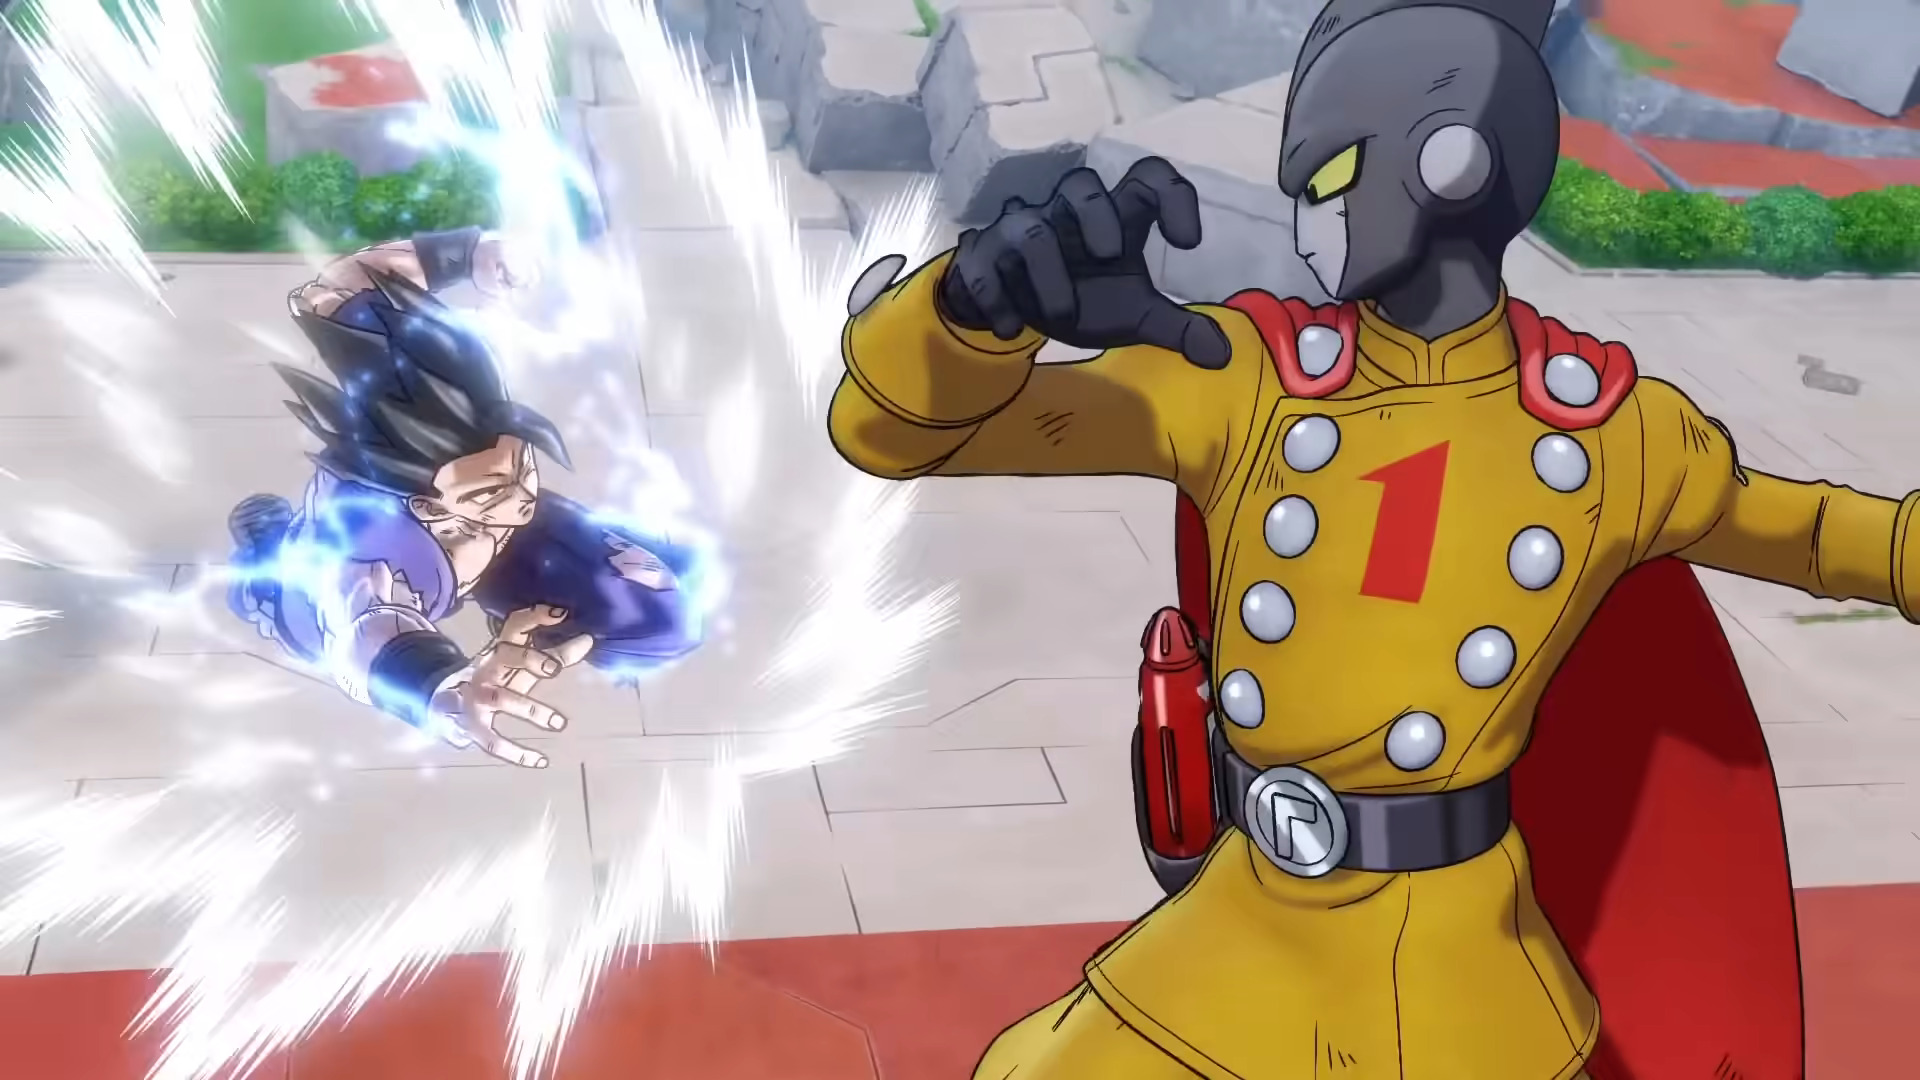 Dragon Ball Super: SUPER HERO lands on Crunchyroll next month